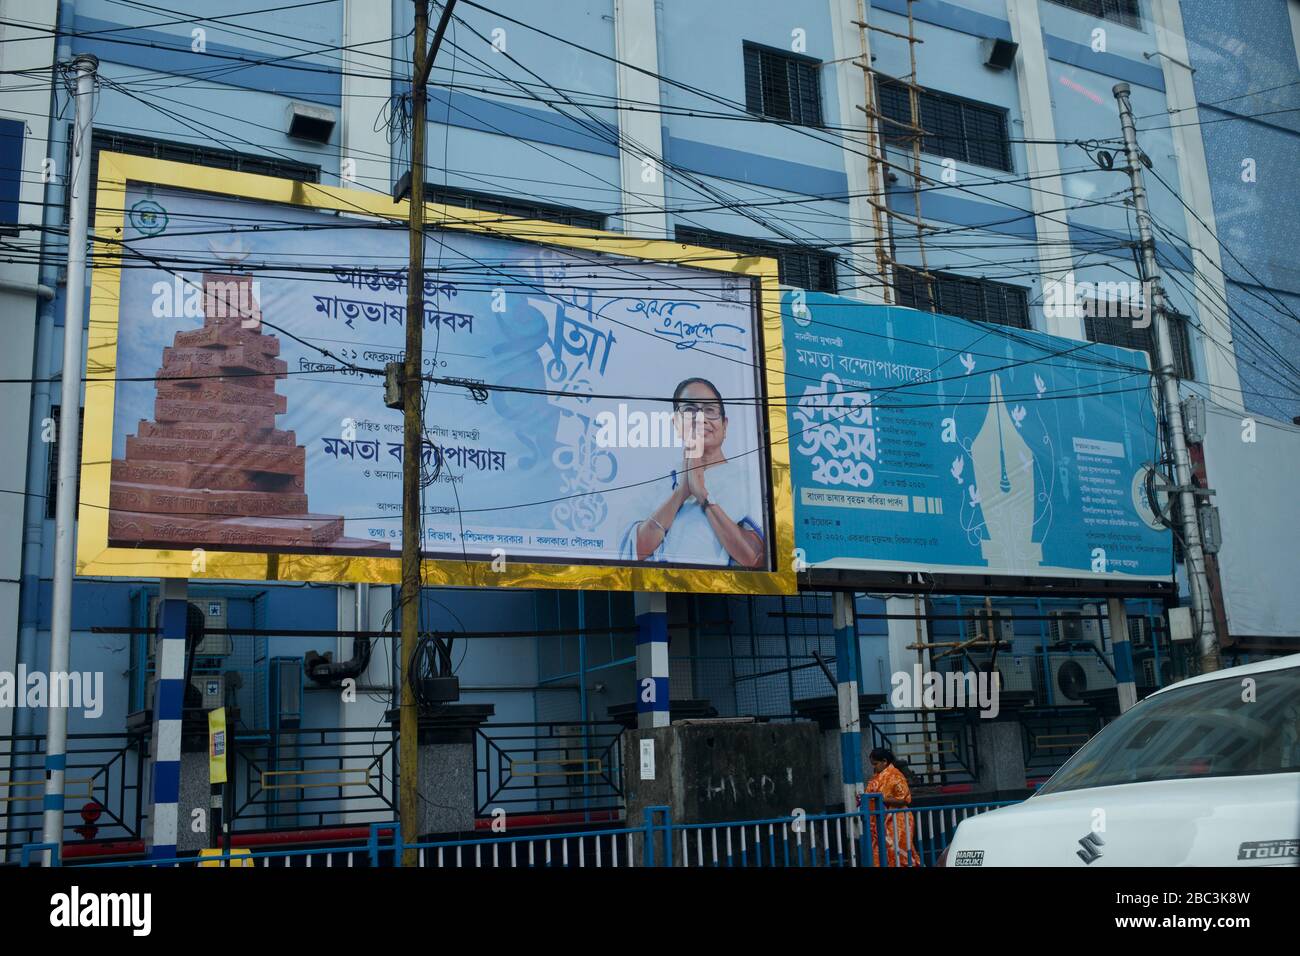 Advertising hoardings in Kolkata, India Stock Photo